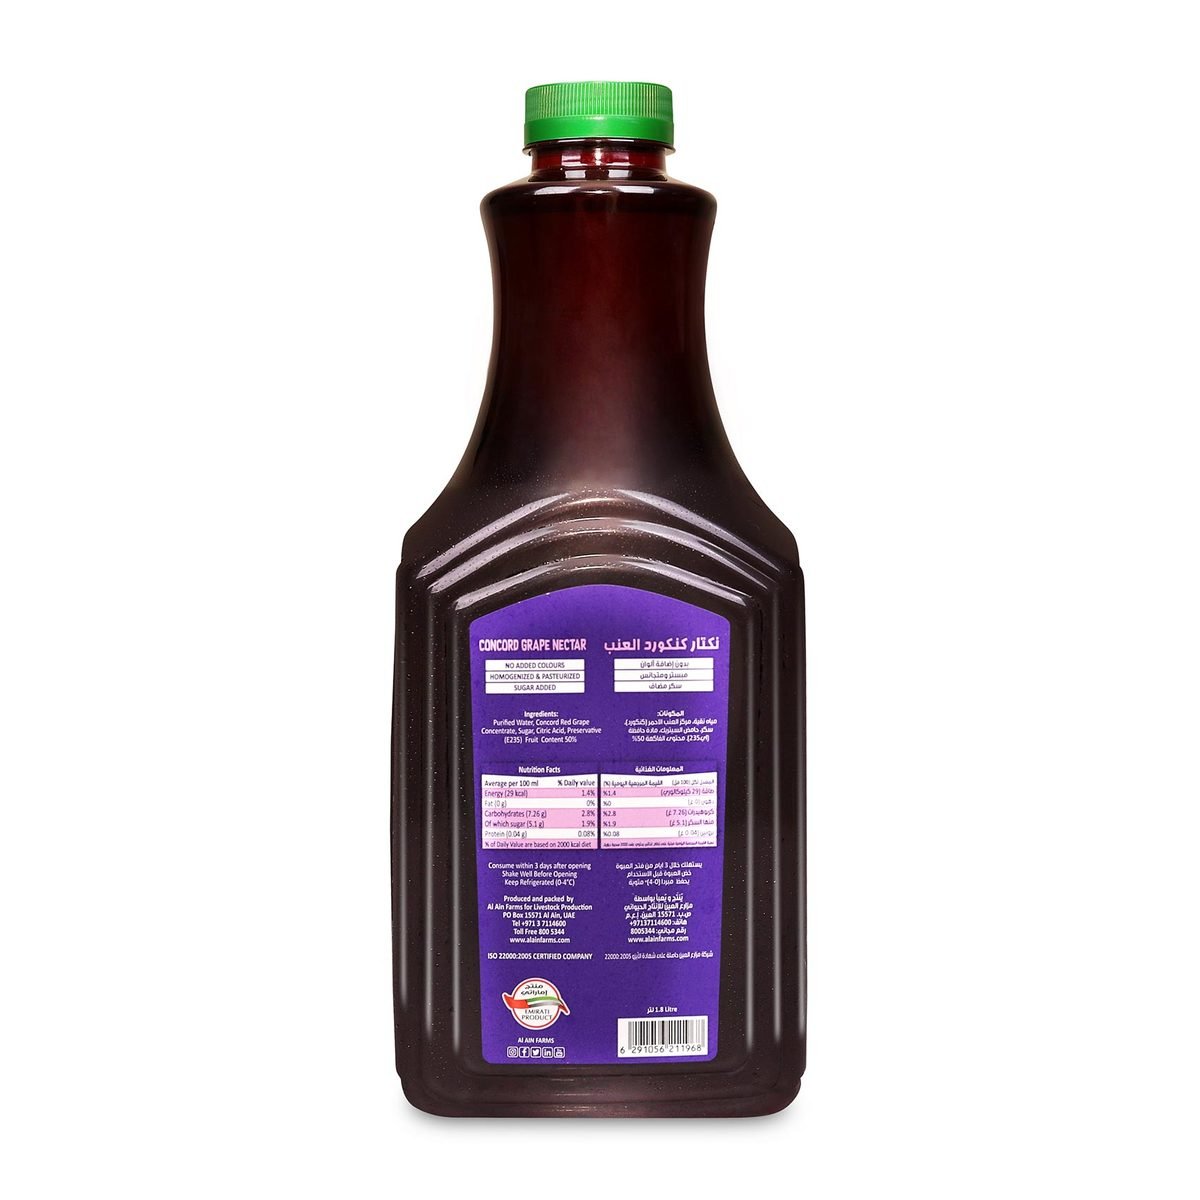 Al Ain Concord Grape Juice 1.8 Litres